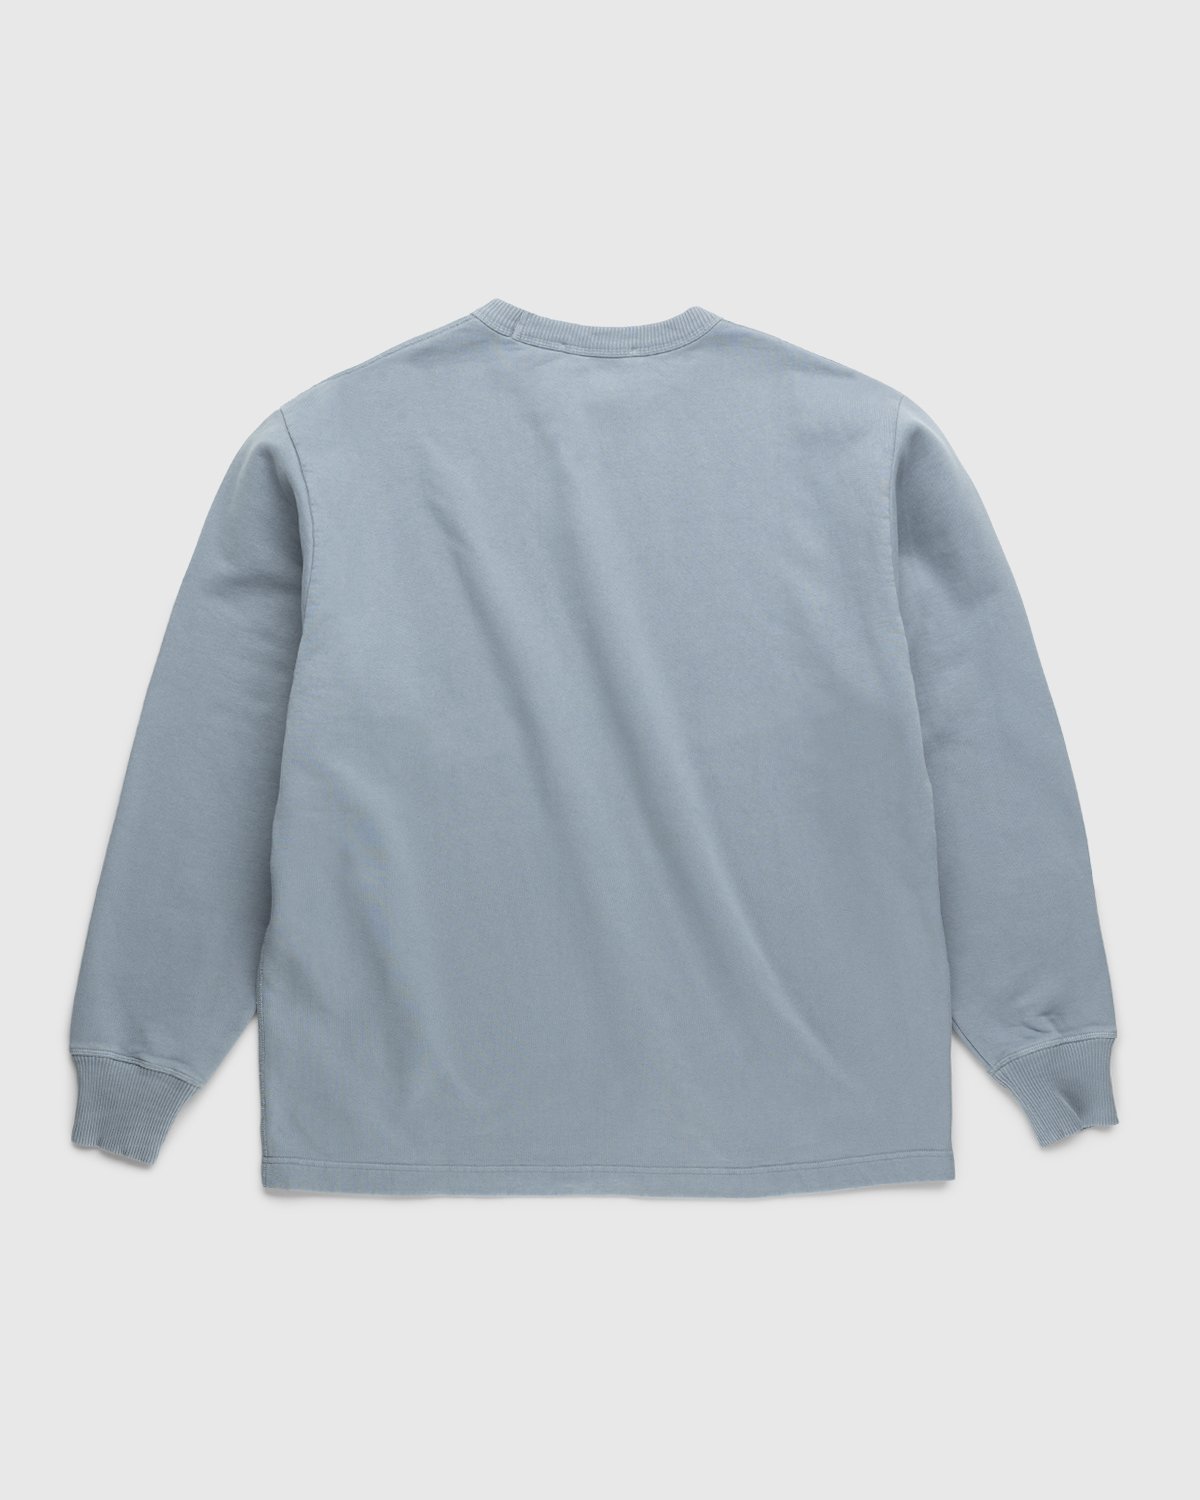 Acne Studios - Organic Cotton Crewneck Sweatshirt Steel Grey - Clothing - Grey - Image 2